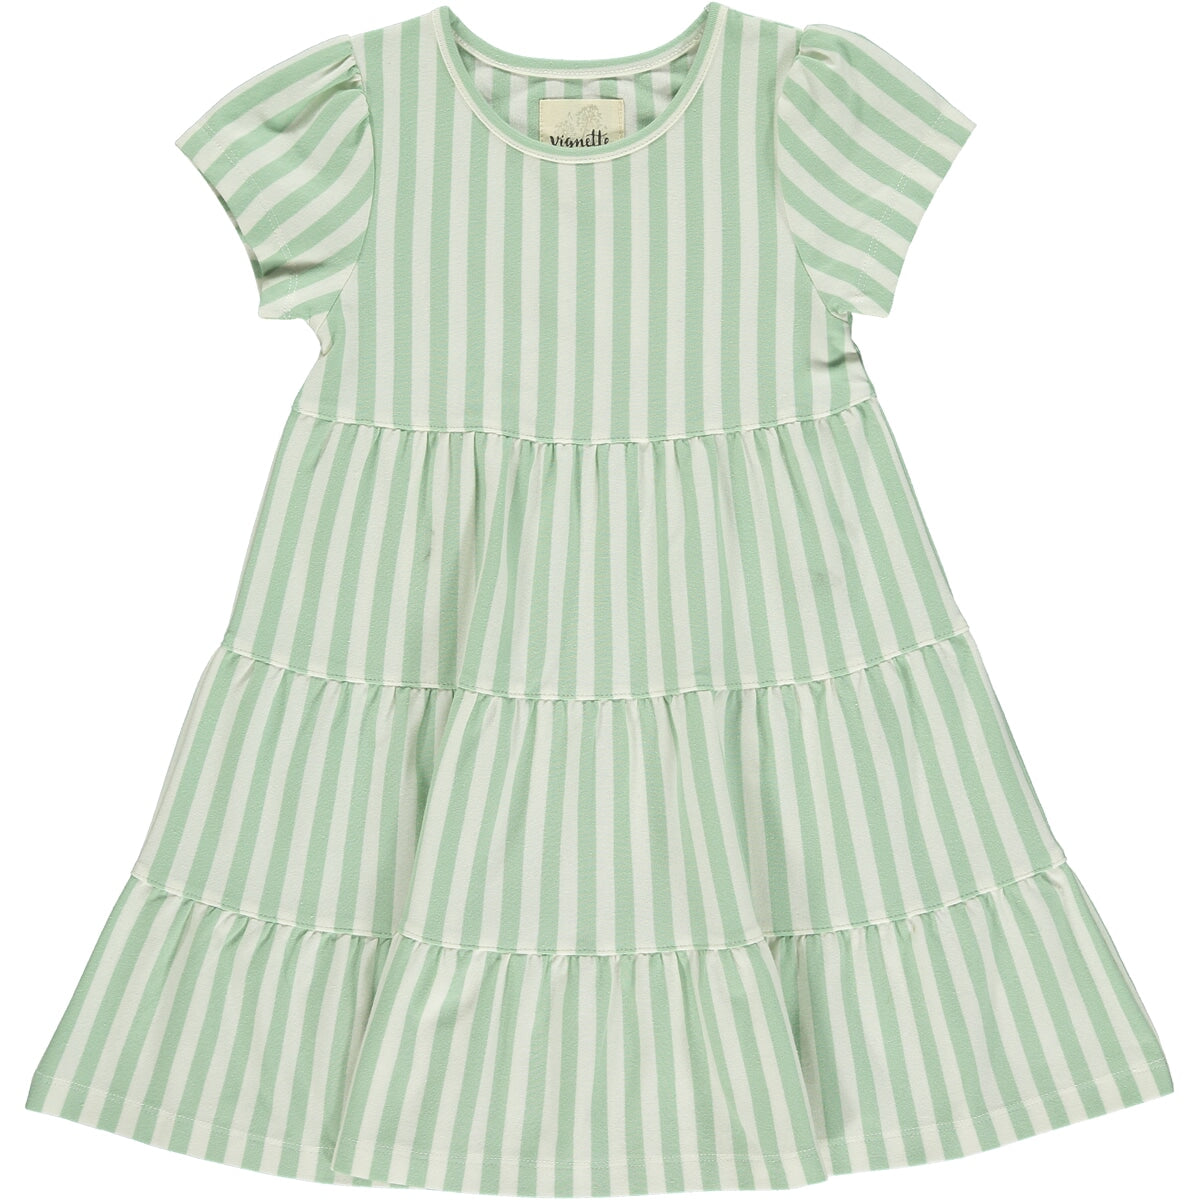 Iona Green Stripe Dress